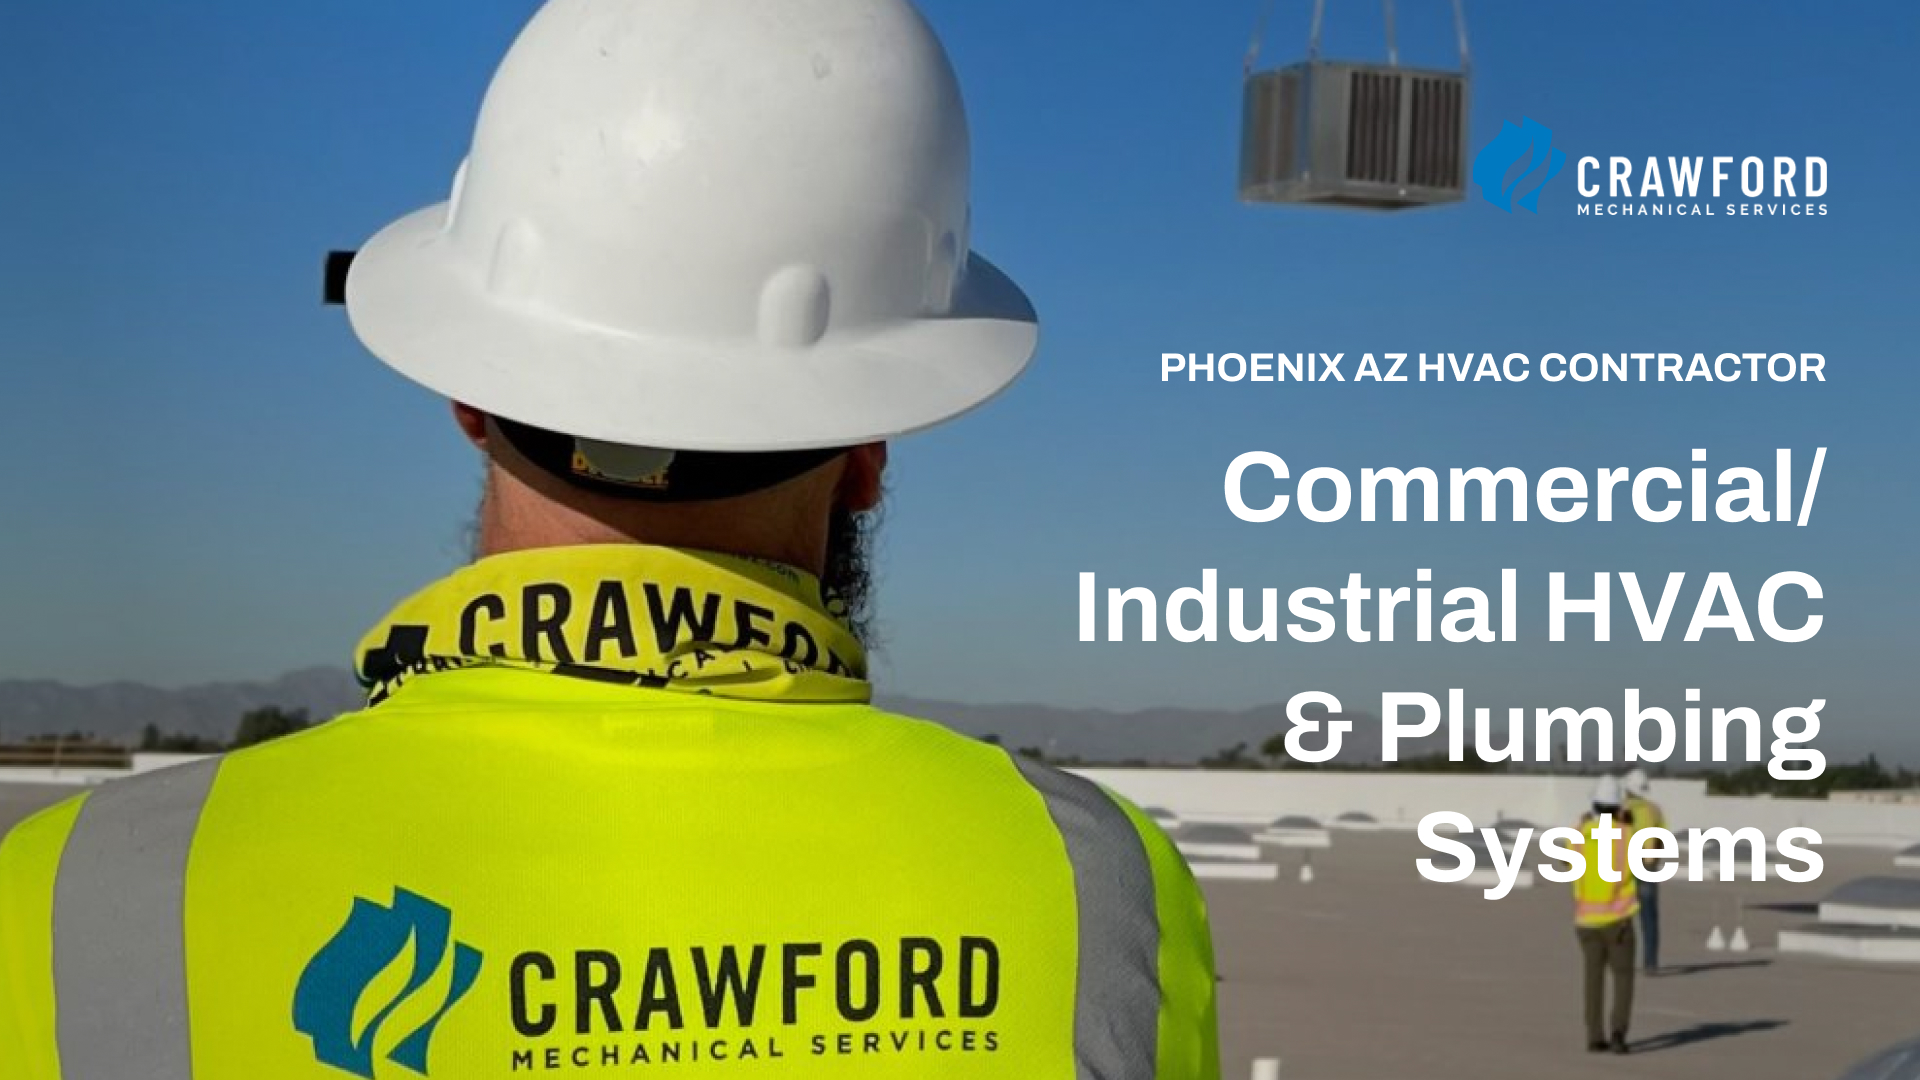 Phoenix AZ HVAC Contractor